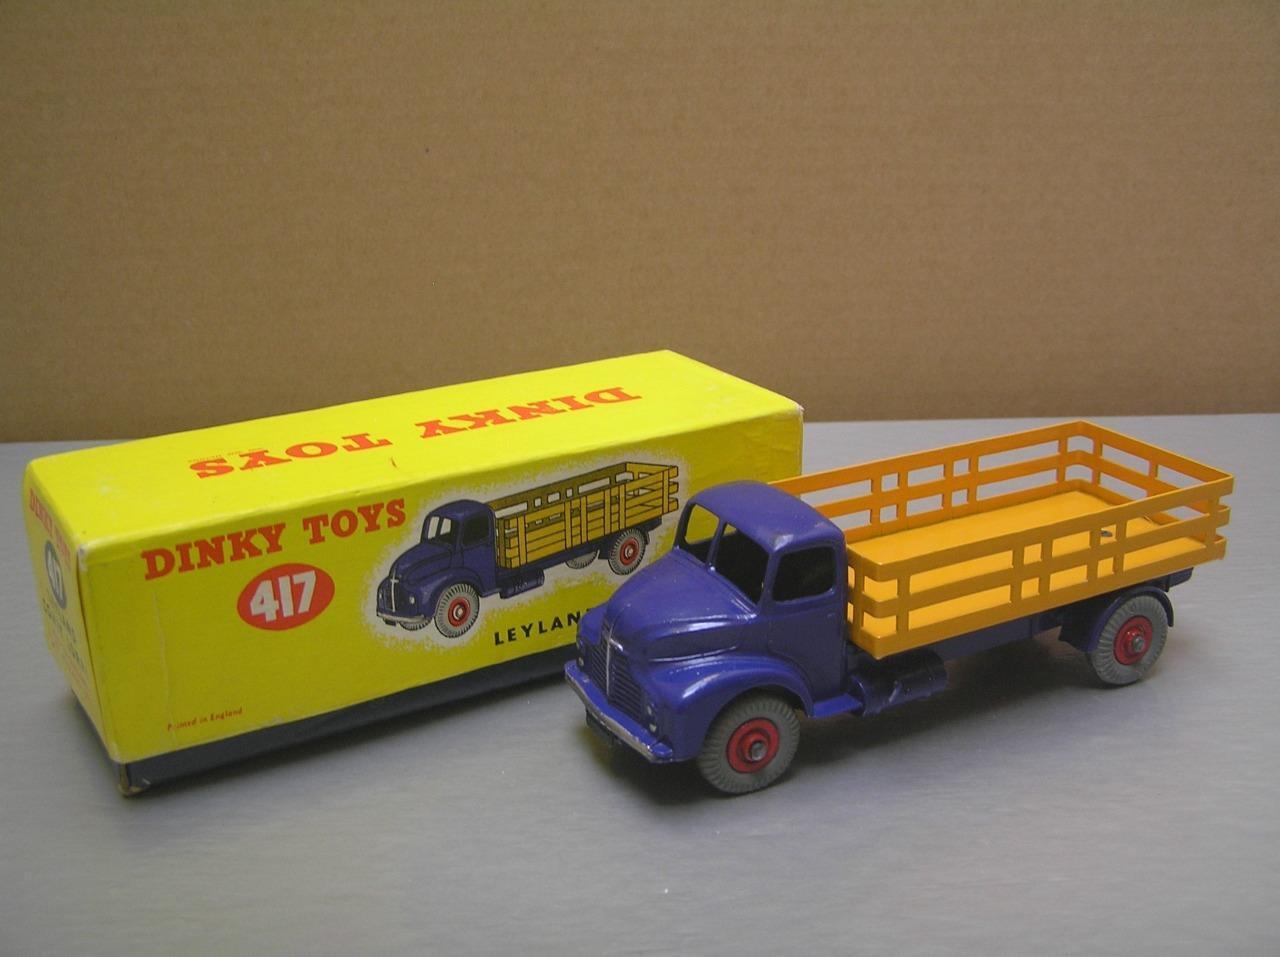 Dinky Toys 417 Leyland Comet Lorry Violet Blue & Deep Yellow Superb MIB